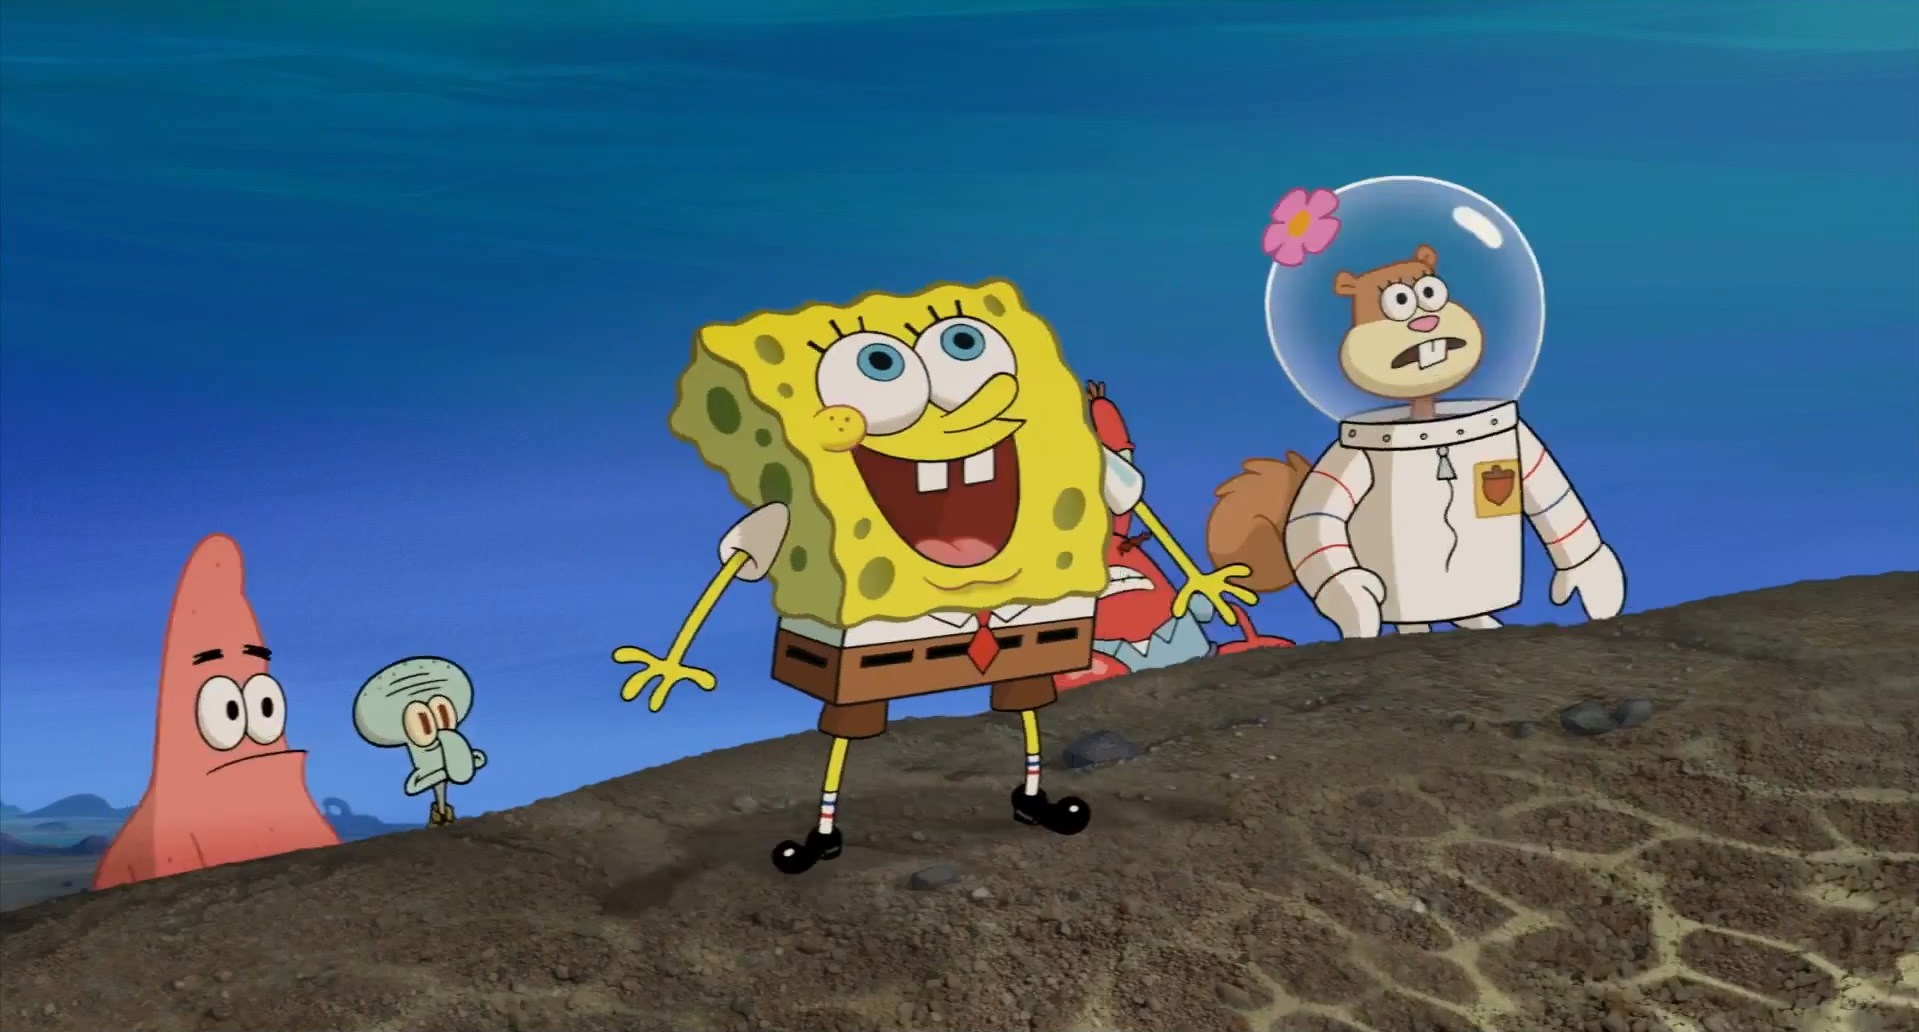 sandy-spongebob-patrick-on-the-beach-the-spongebob-squarepants-movie-sponge-out-of-water.jpg